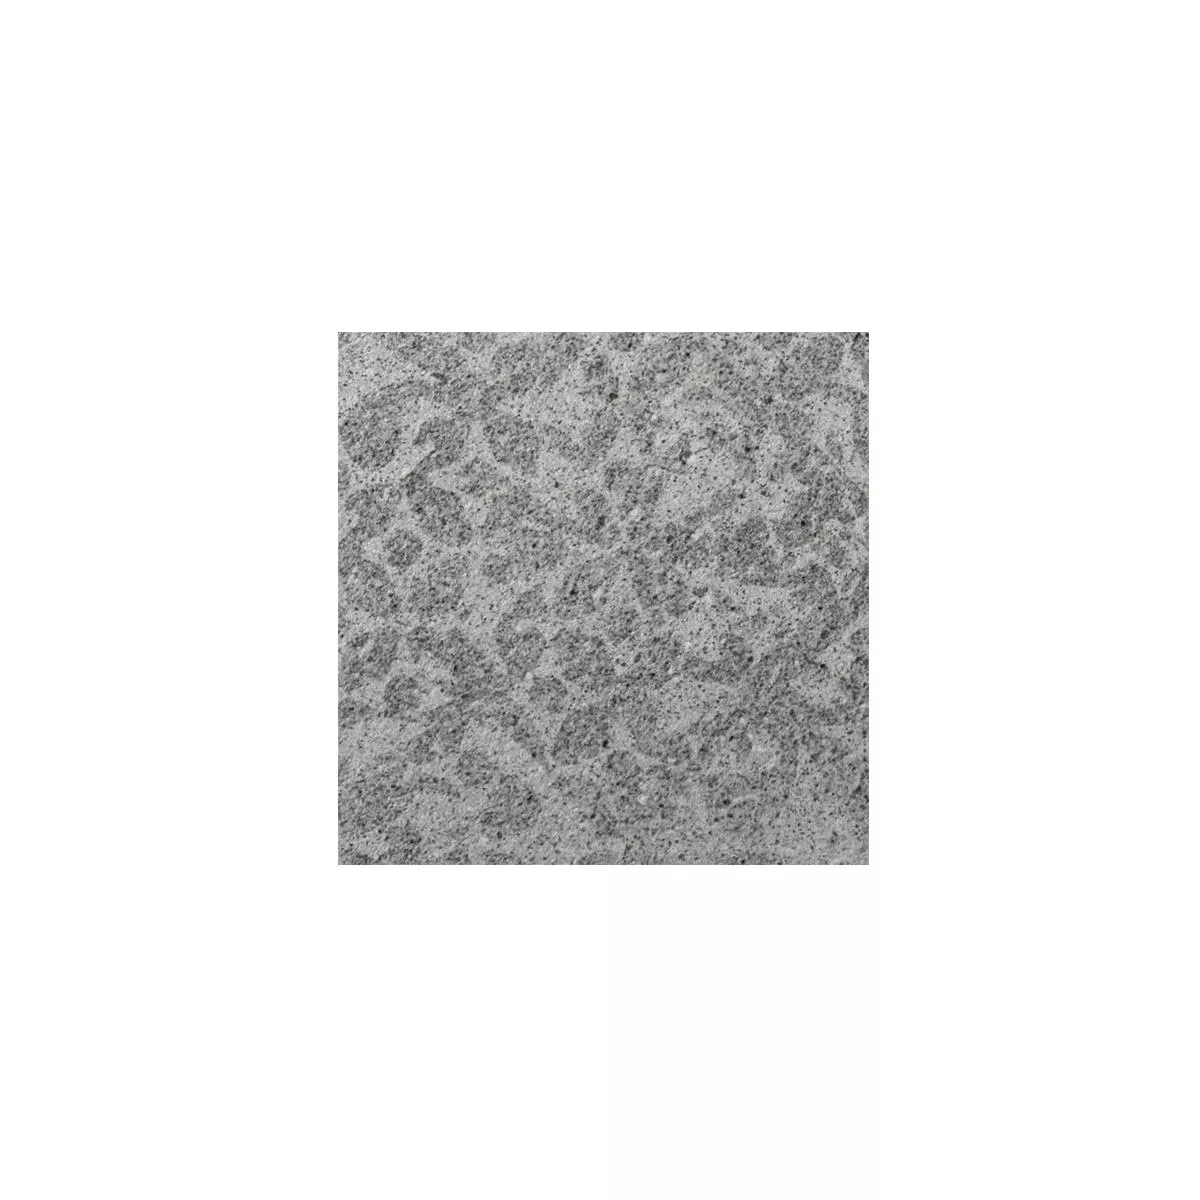 Muster von Keramikmosaik Fliesen Jeylo Retrooptik Grau Q95